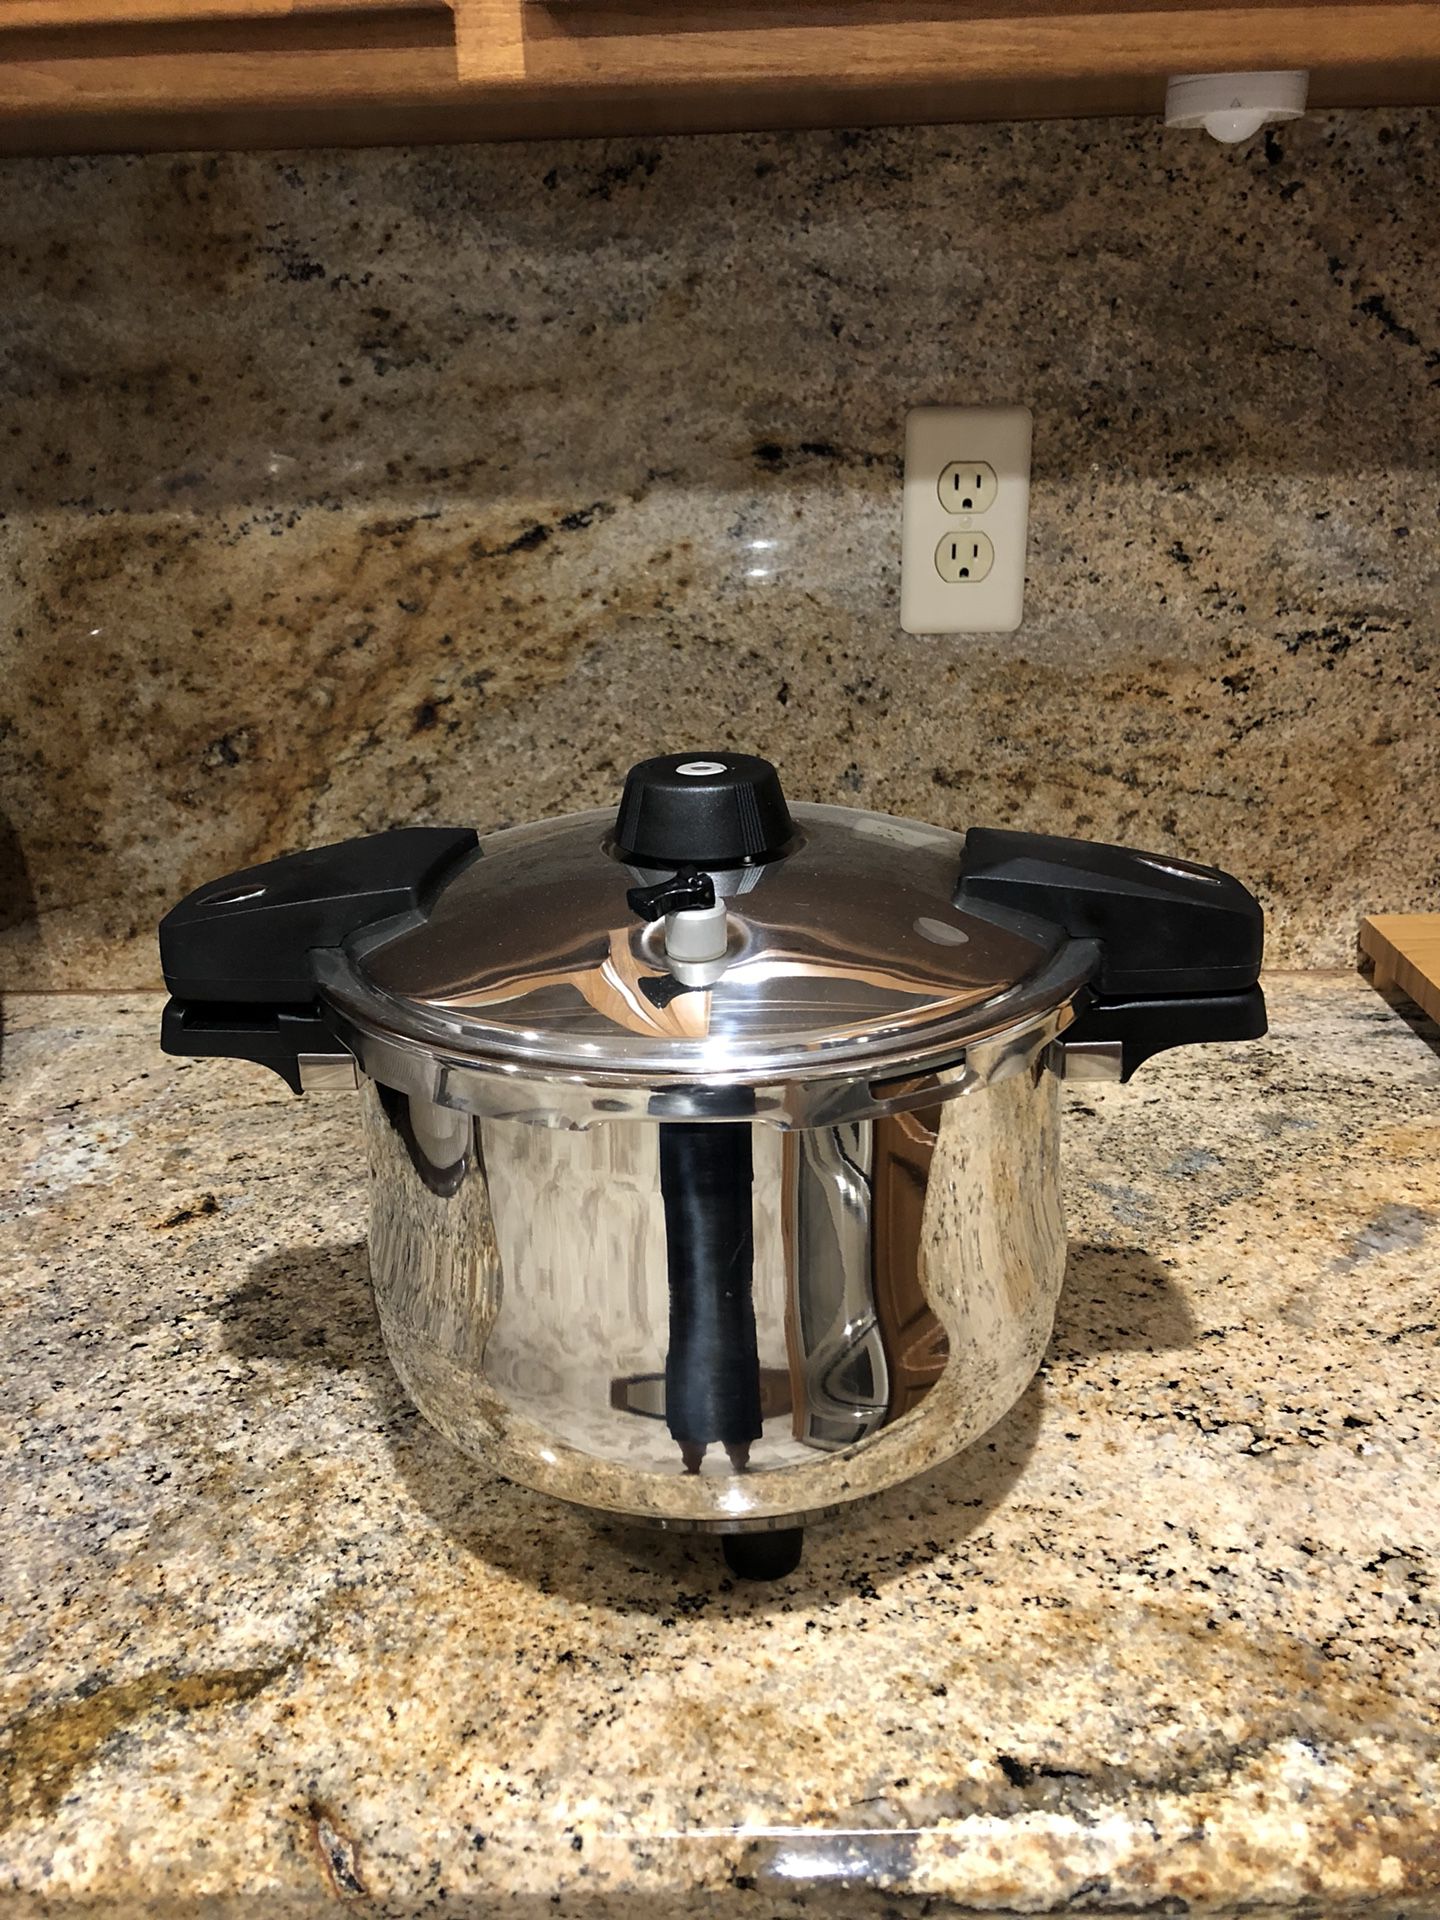 Pressure cooker, farberware for Sale in College Park, MD - OfferUp